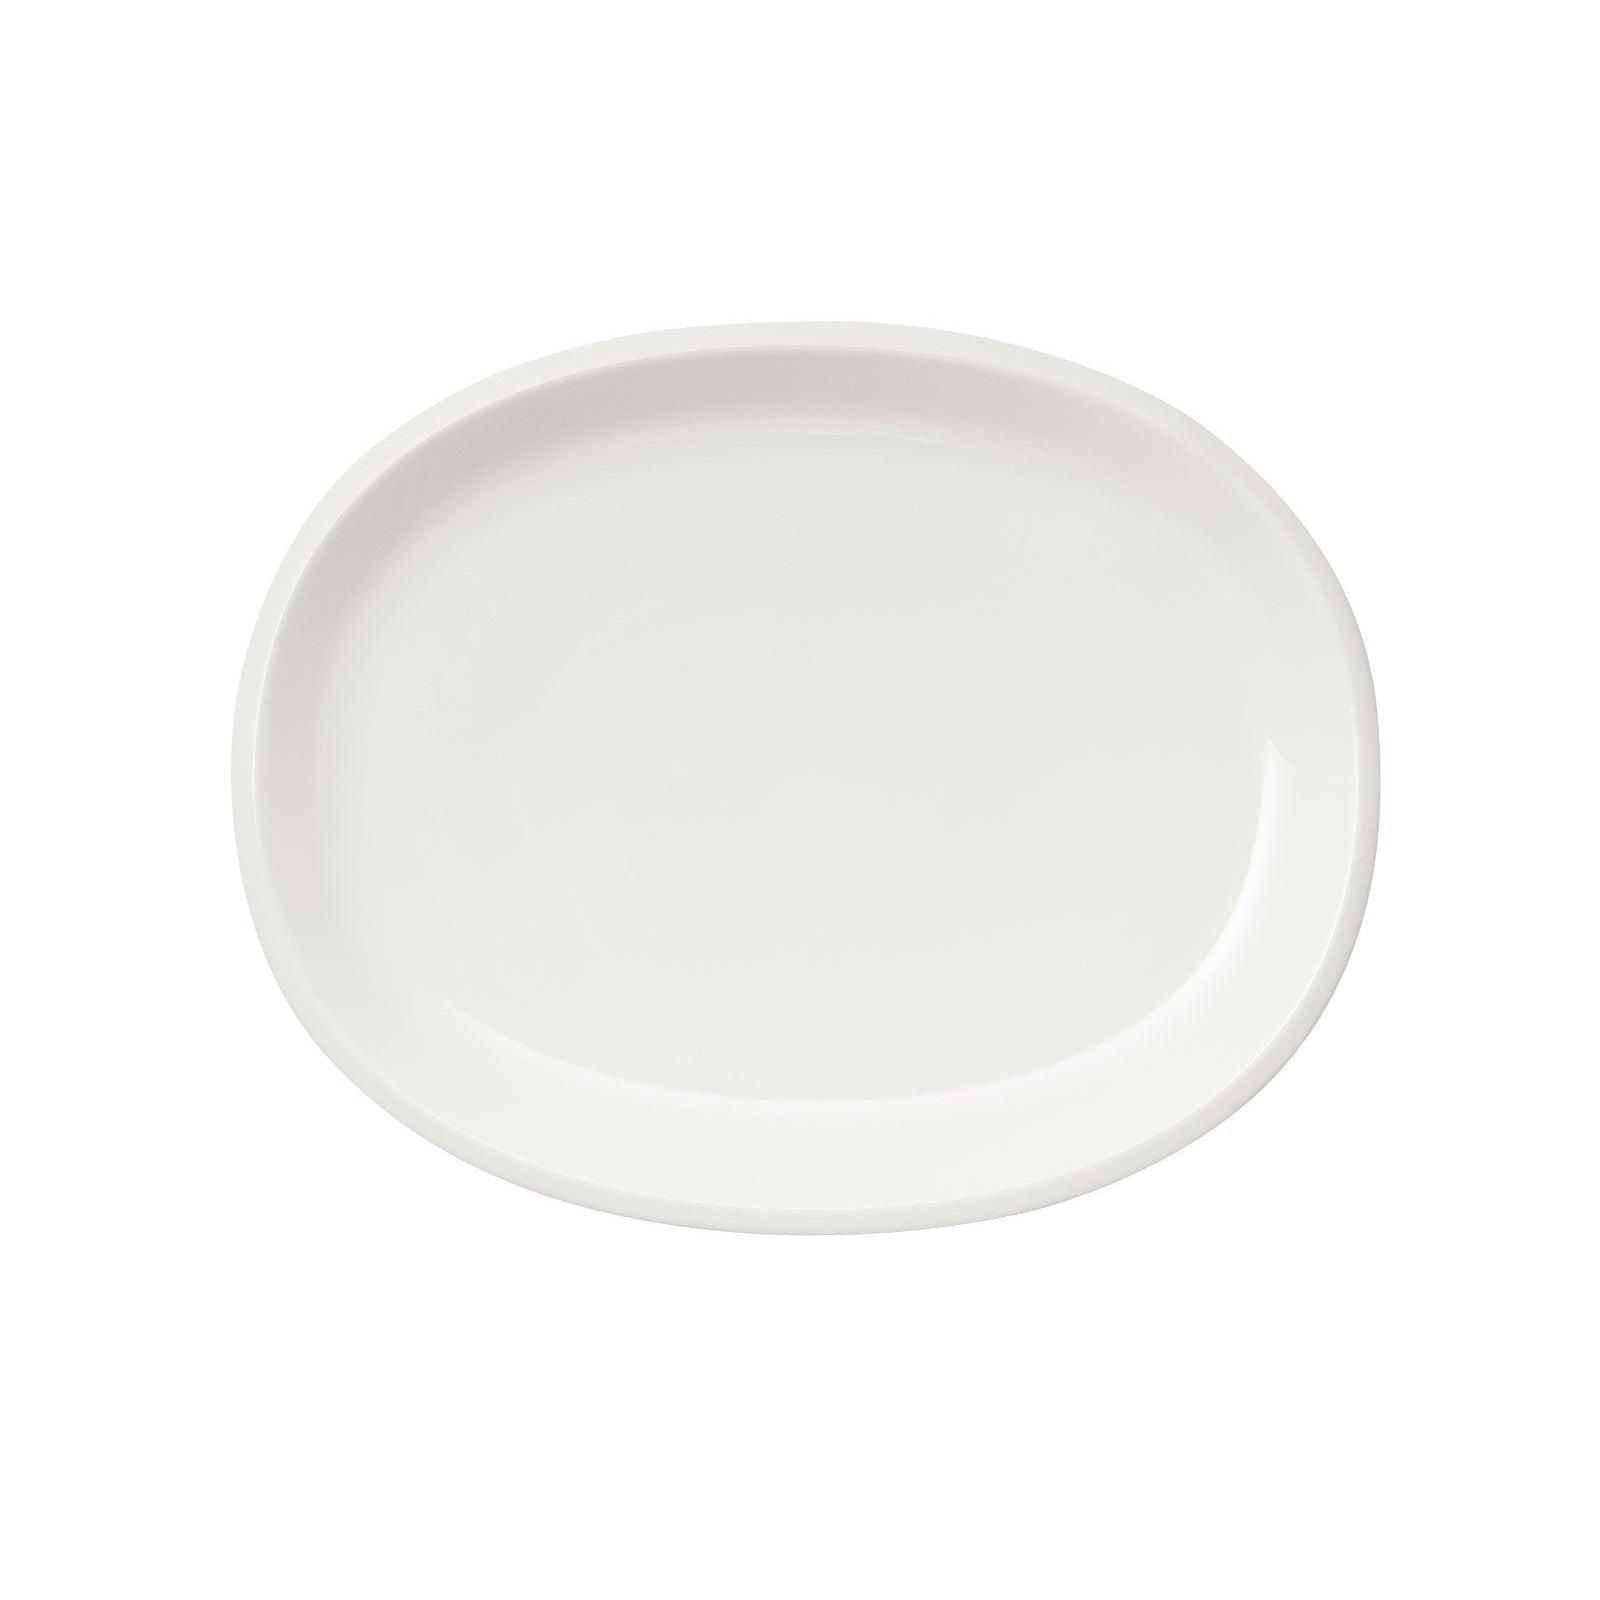 Iittala Raami Serving Plate White, 35cm